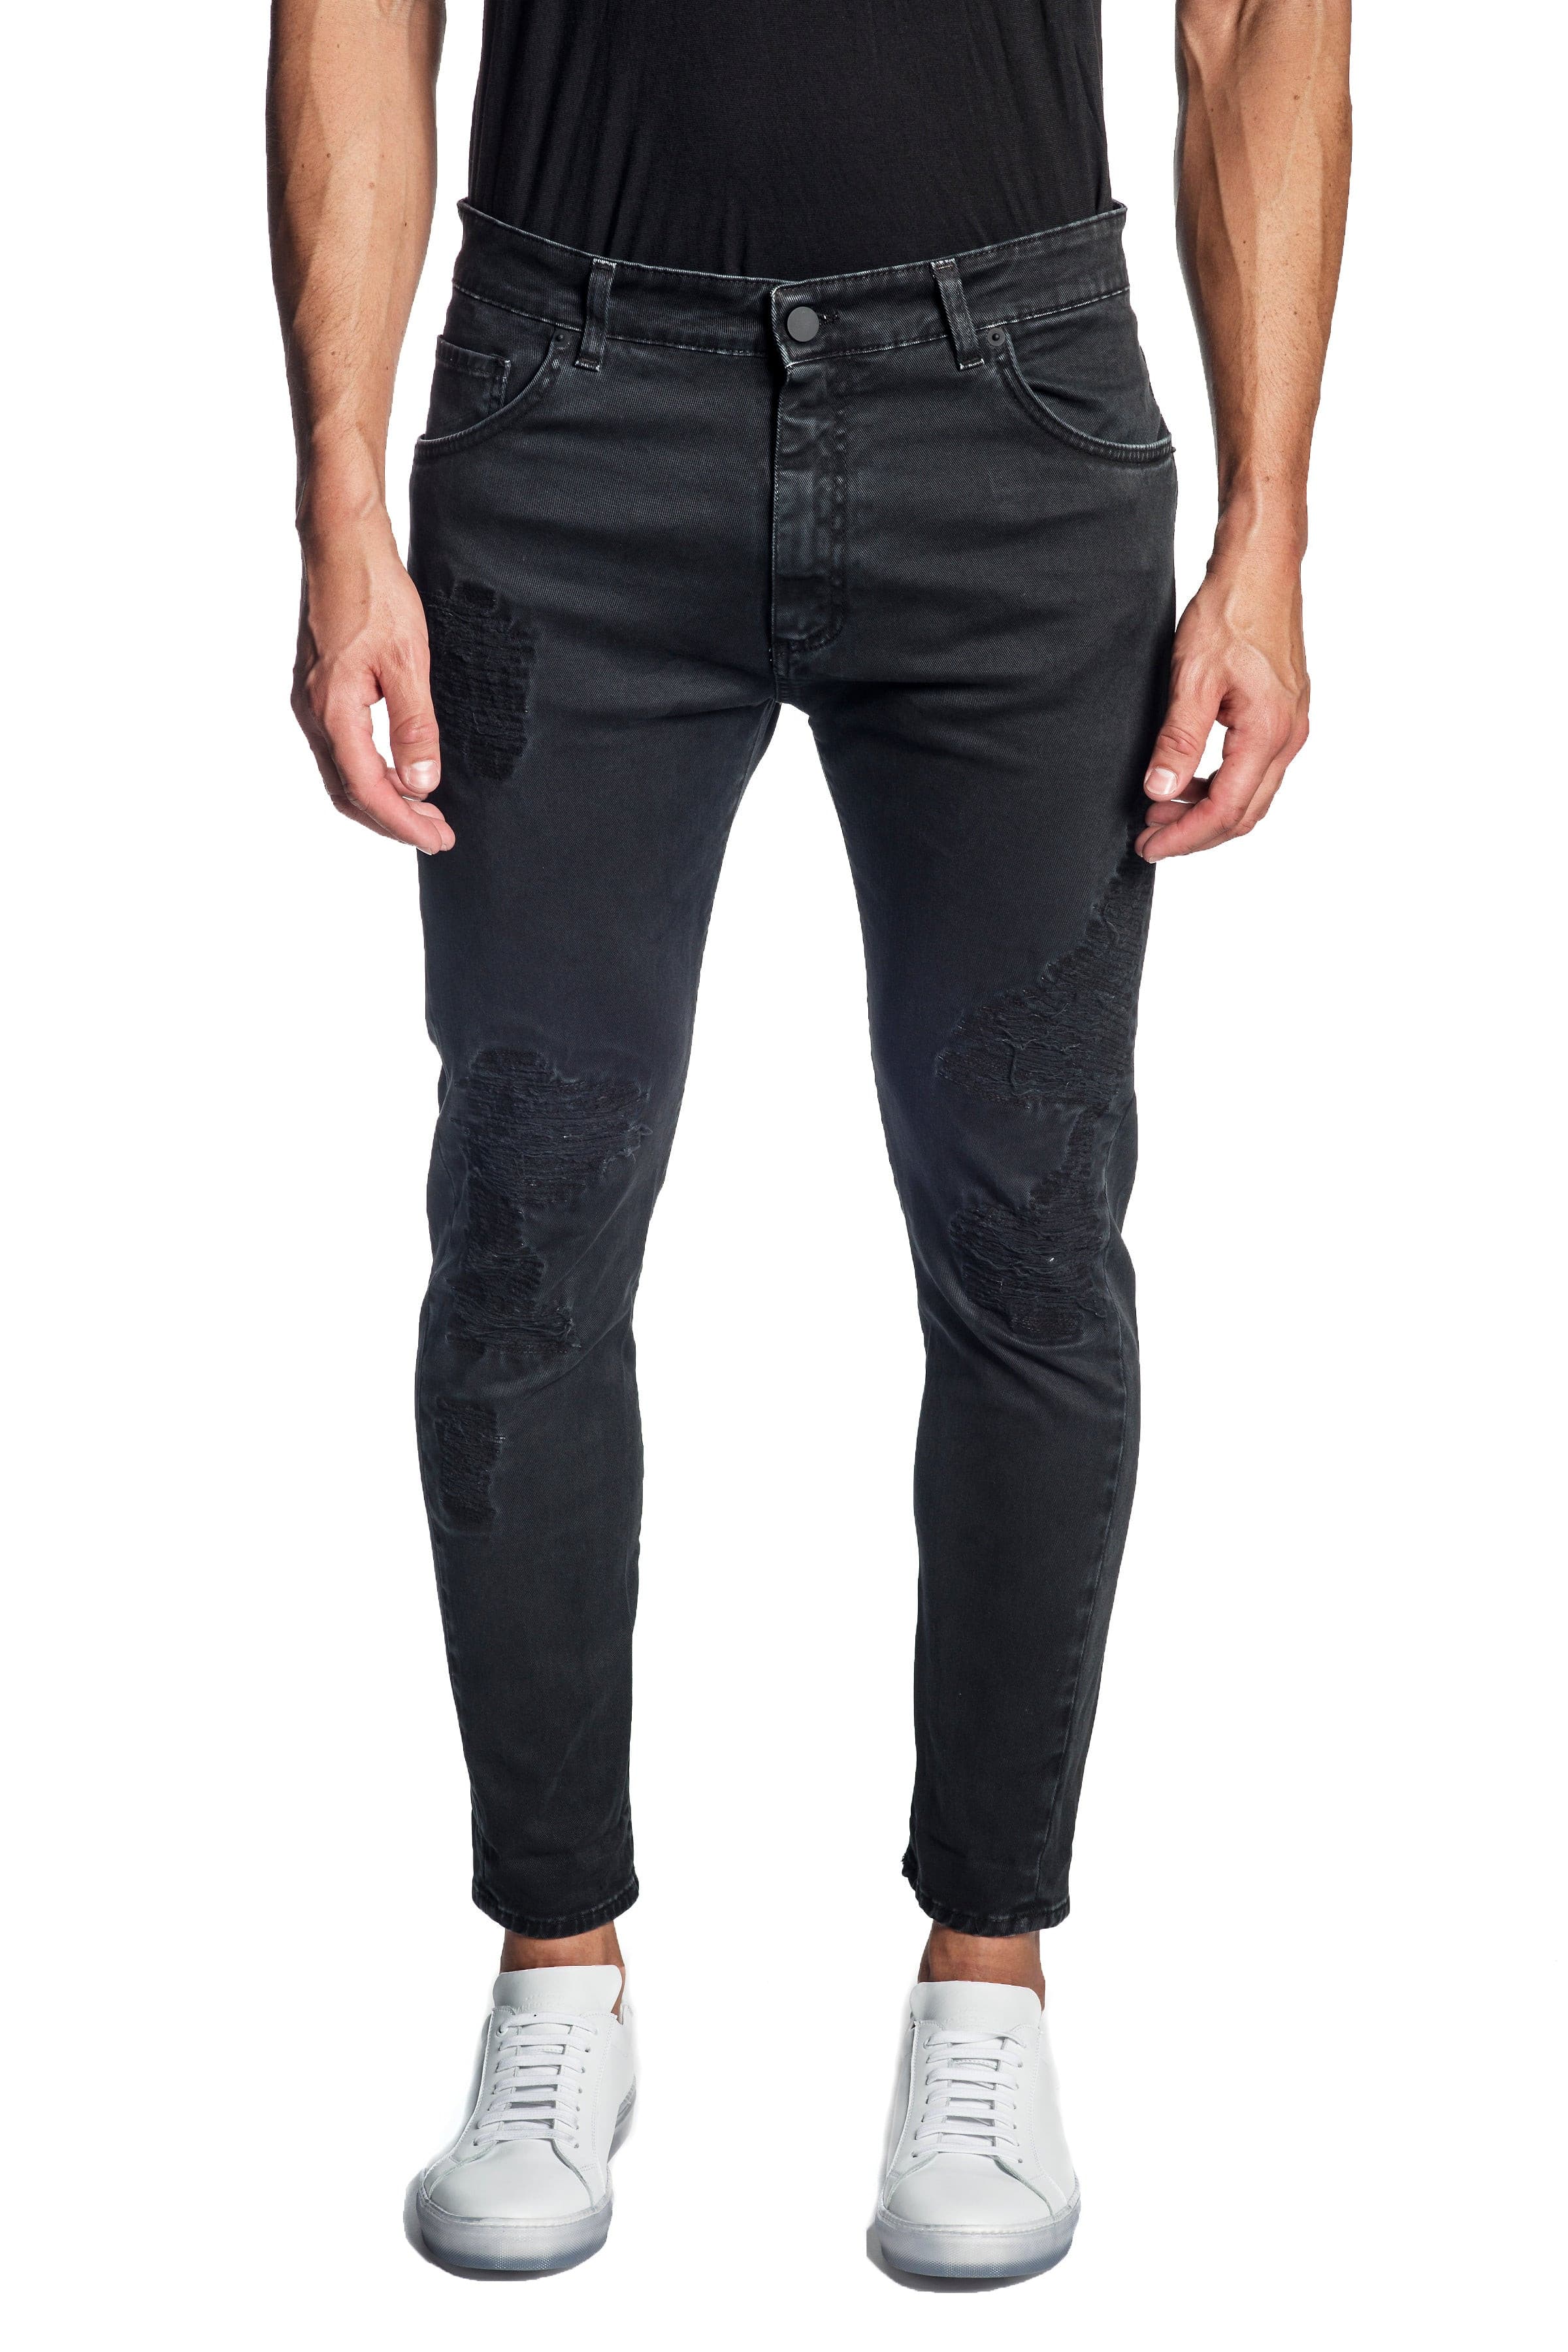 Buy Distressed Denim Jeans Pants For Men at LeStyleParfait